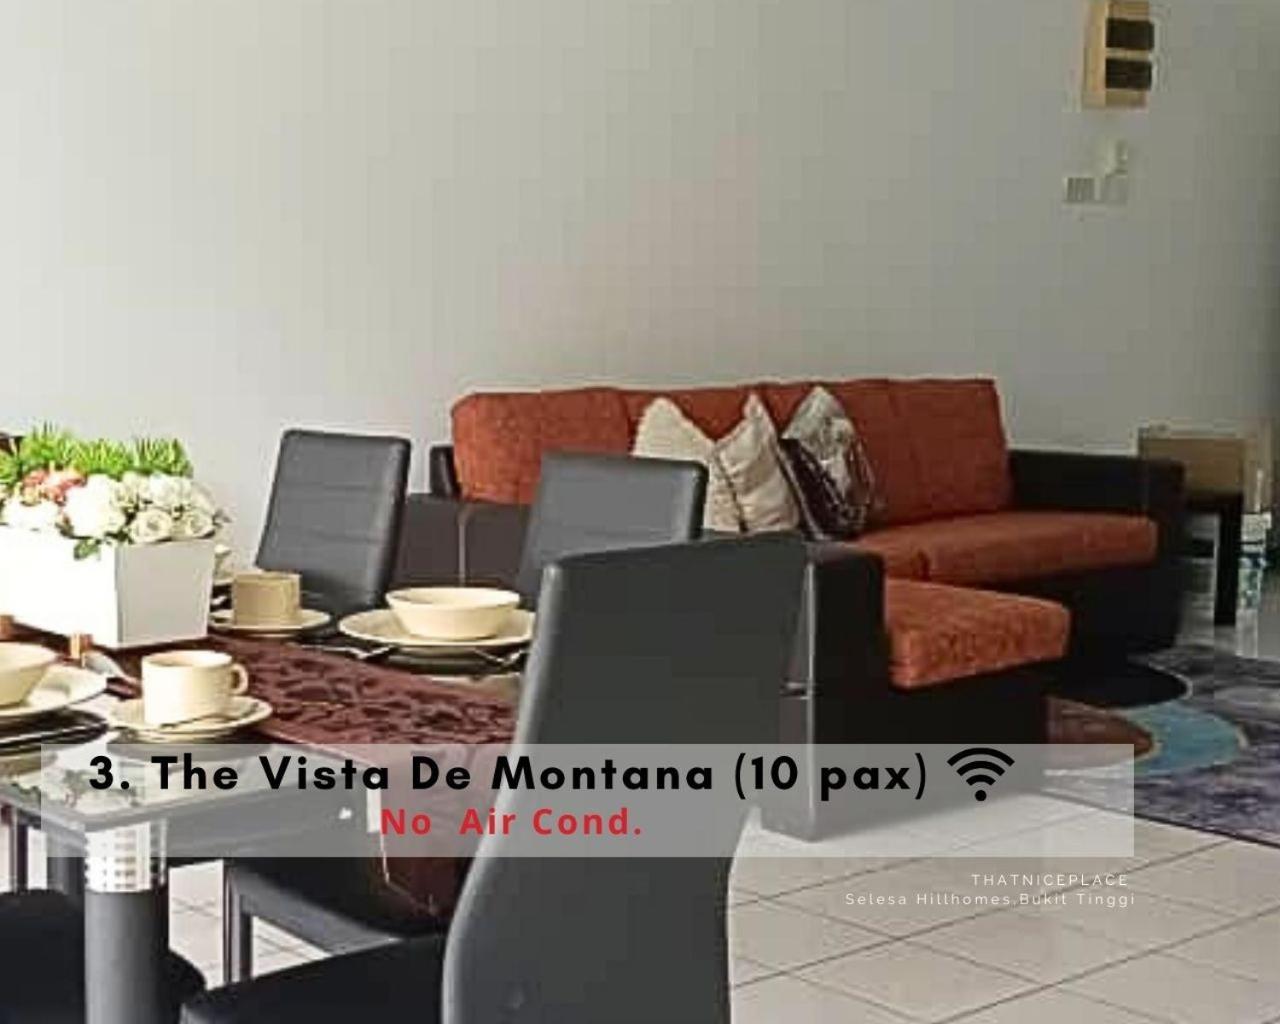 Thatniceplace Apartments In Selesa Hillhomes, Bukit Tinggi, Genting 文冬 外观 照片